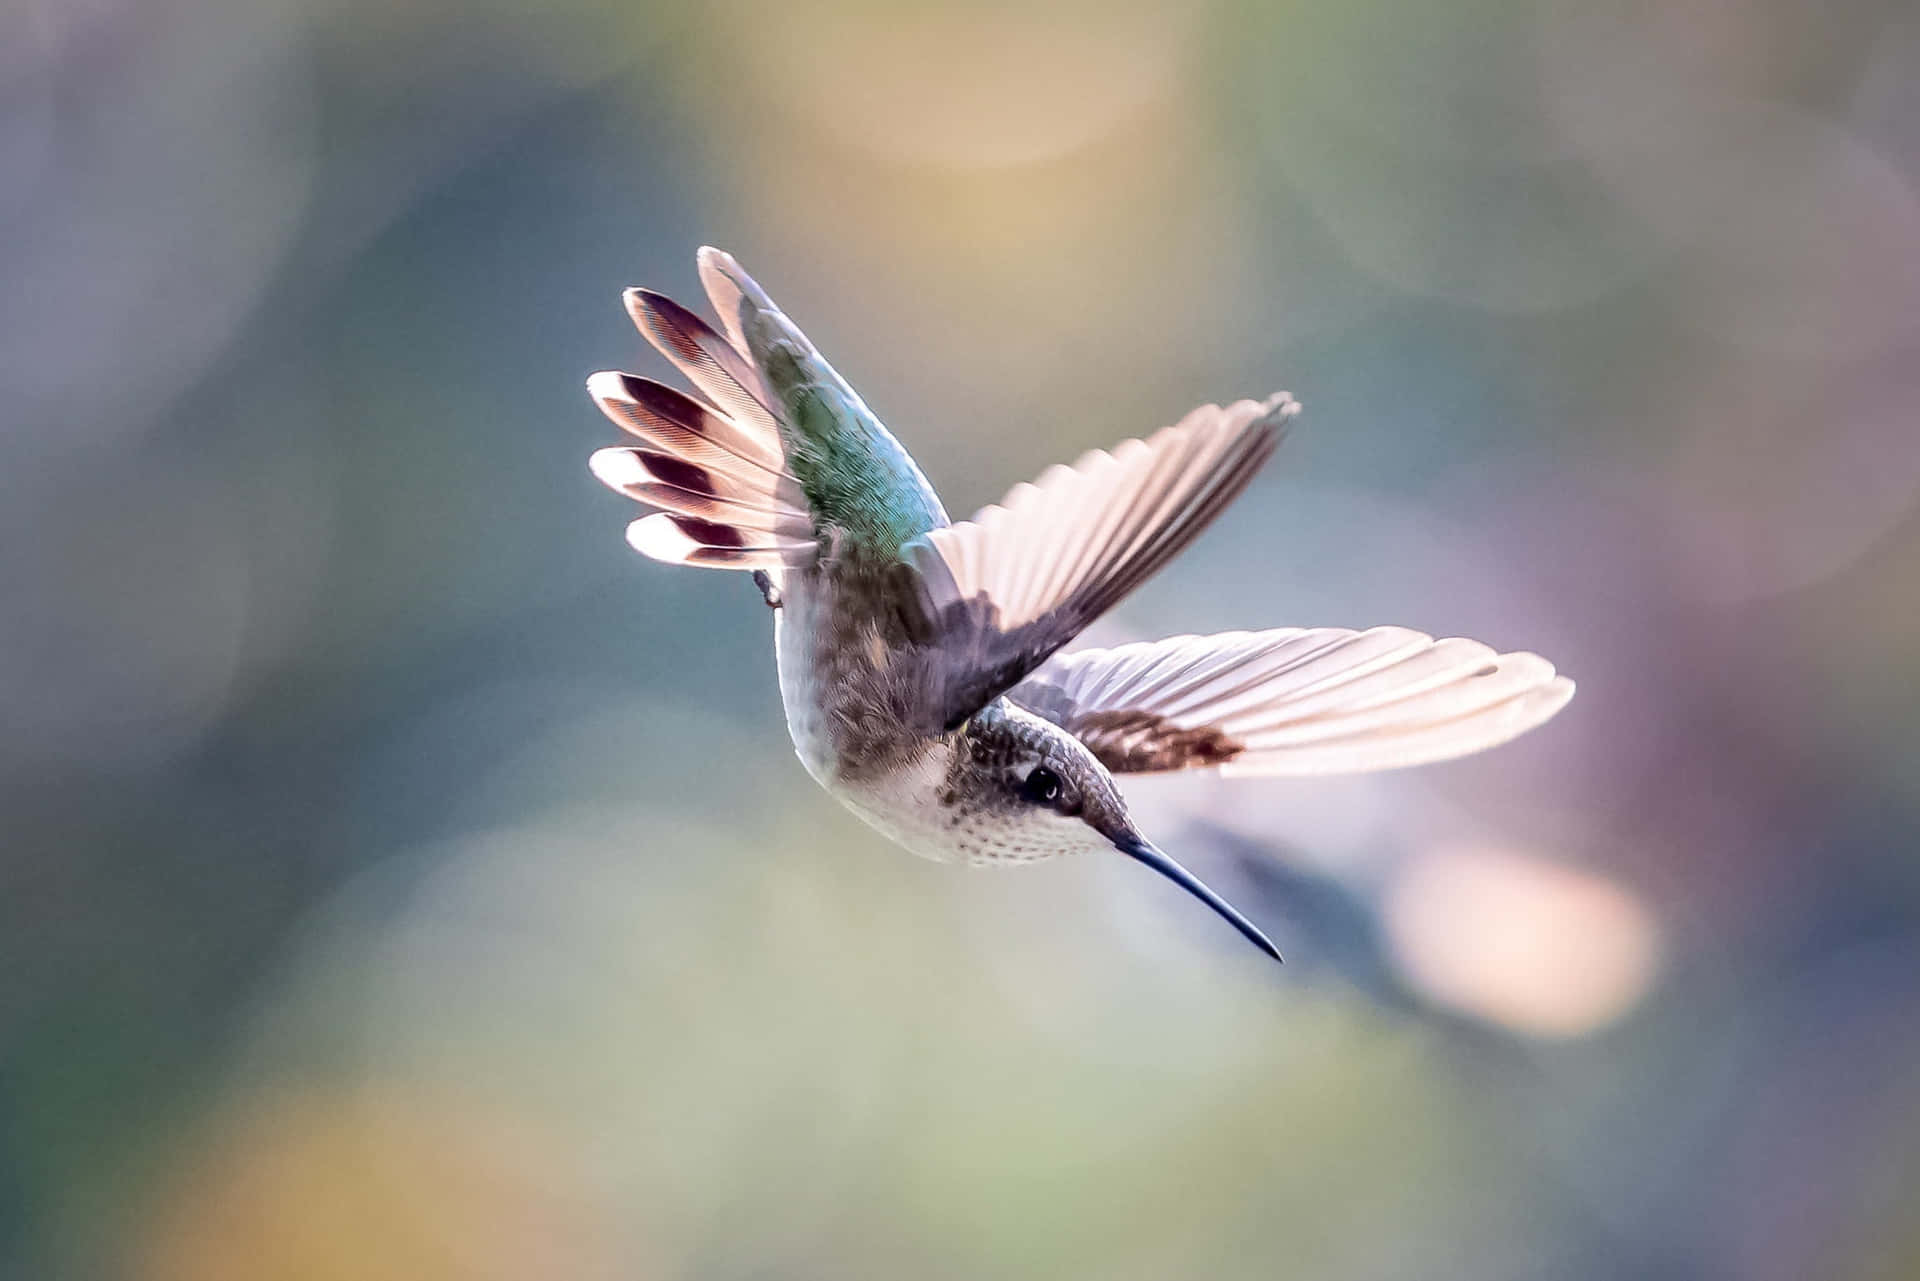 A female hummingbird in mid-flight